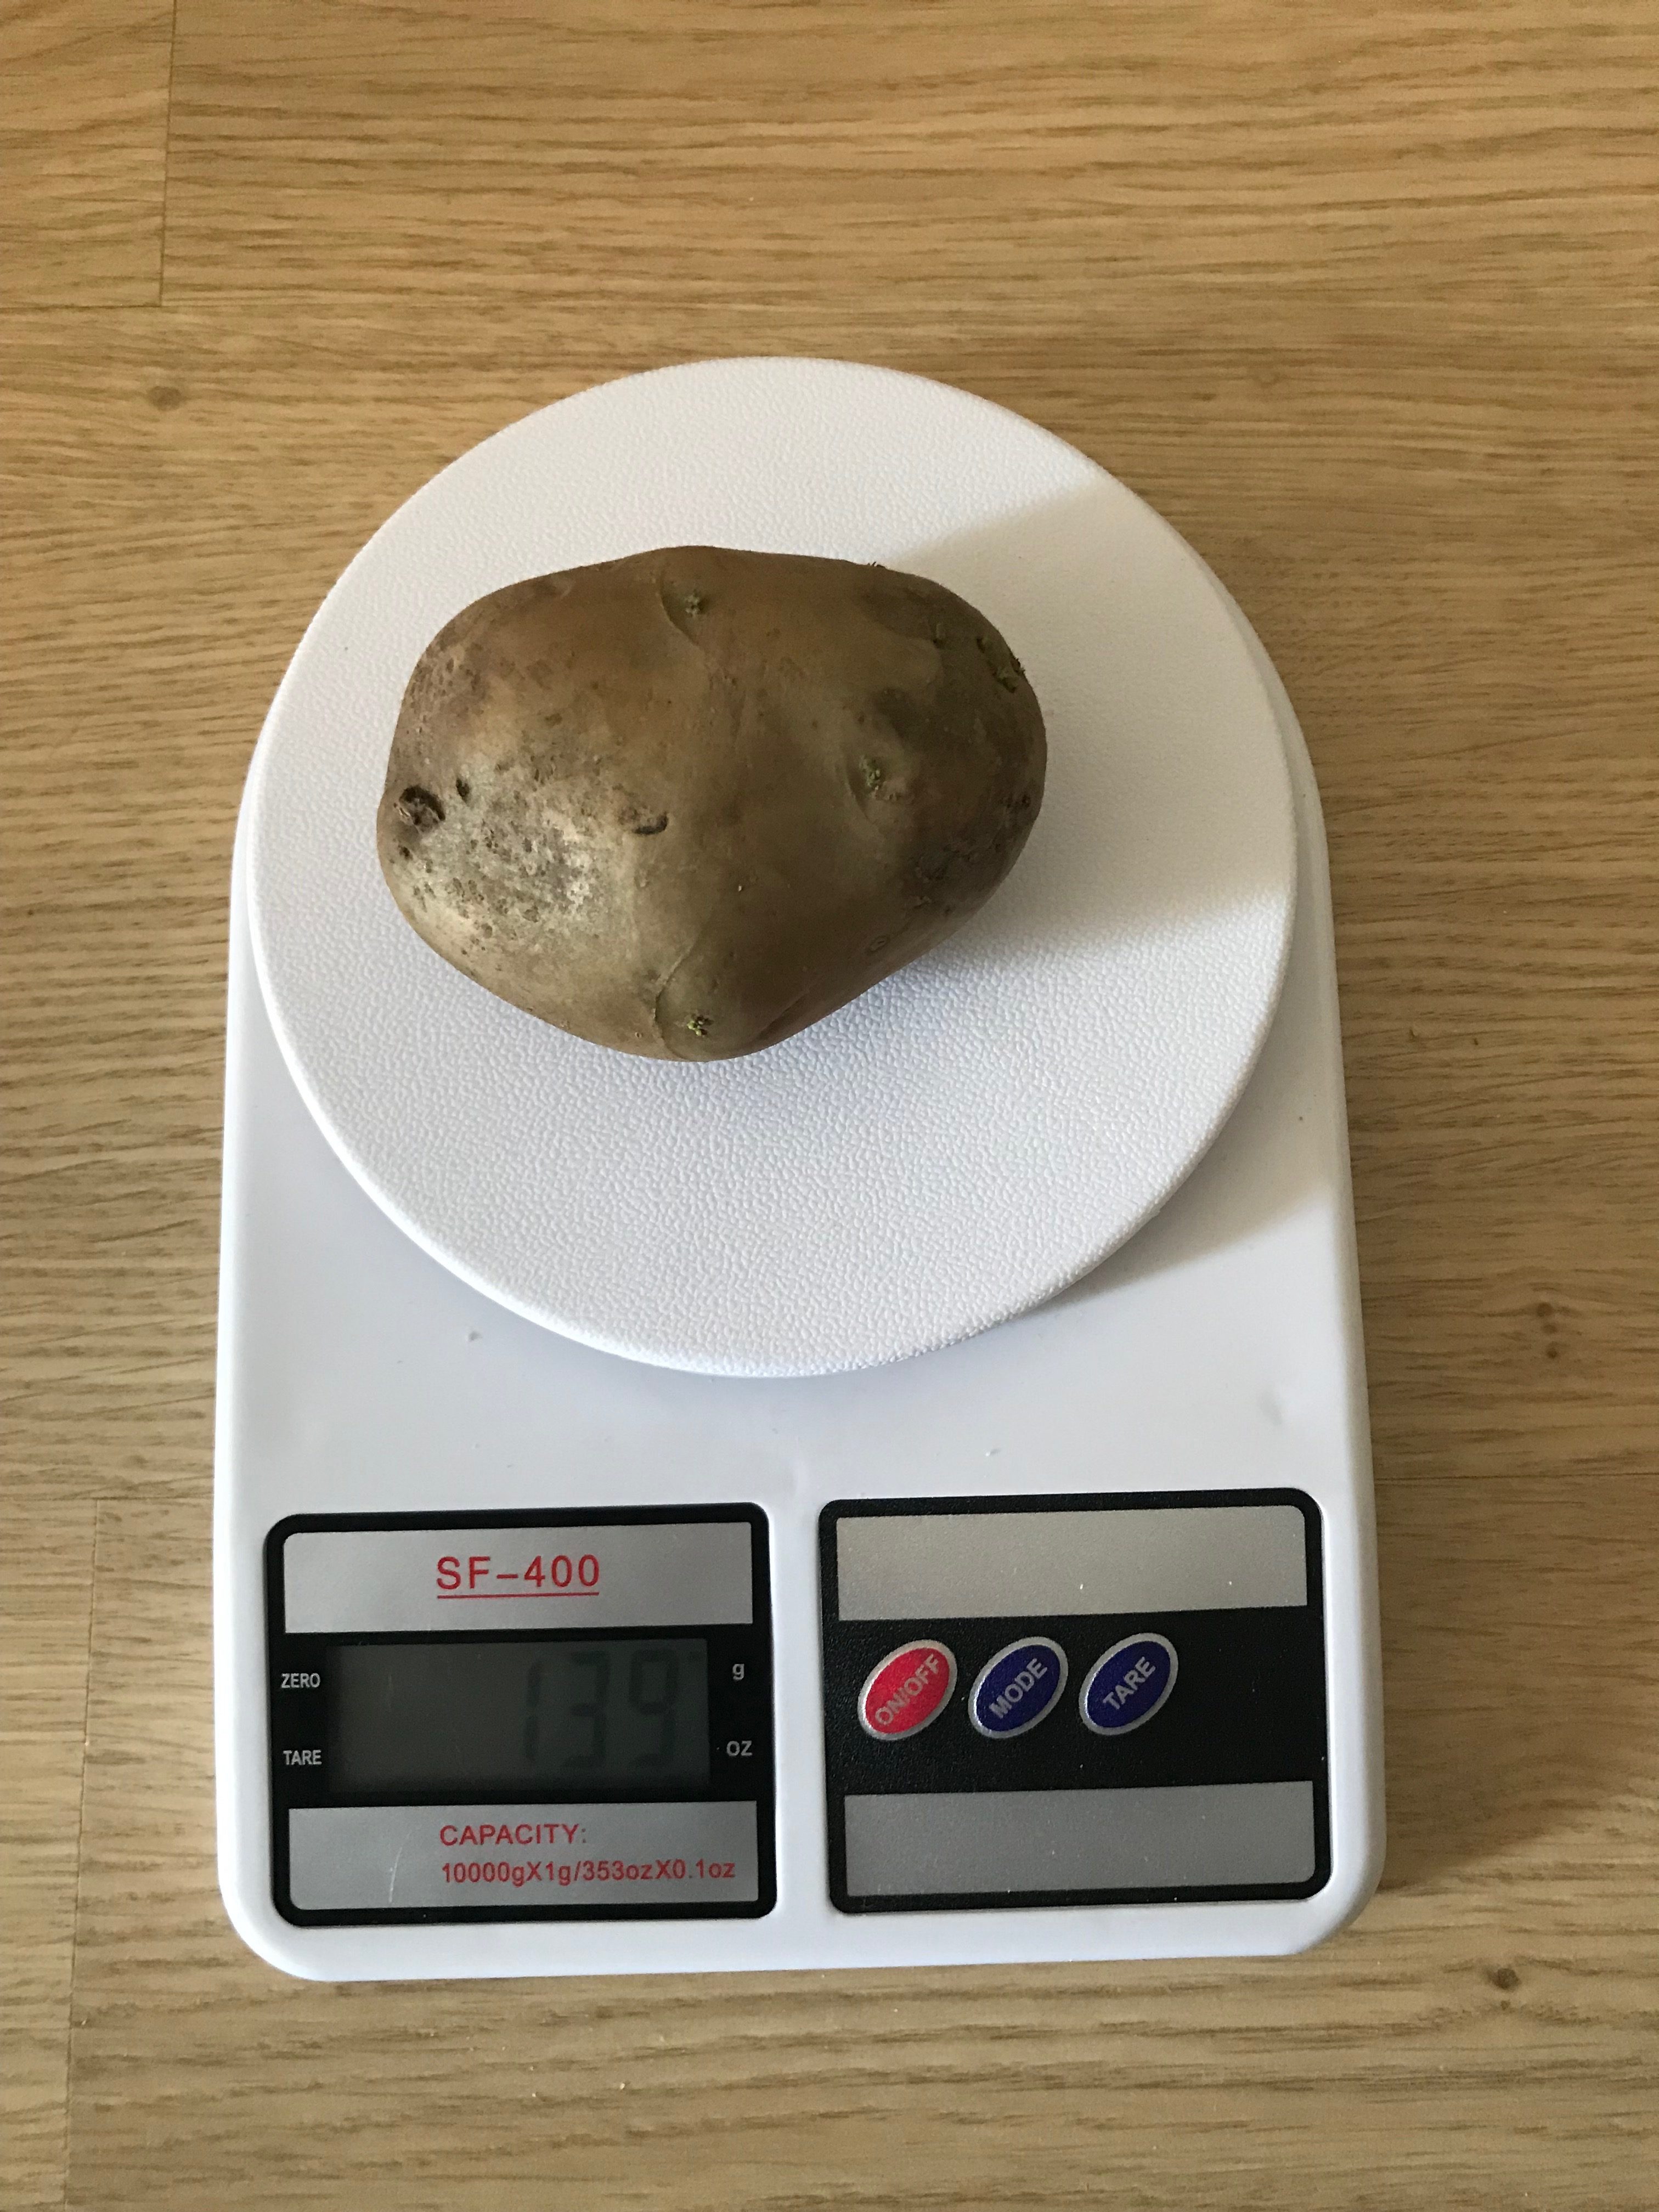 1 orta boy patates ne kadar?